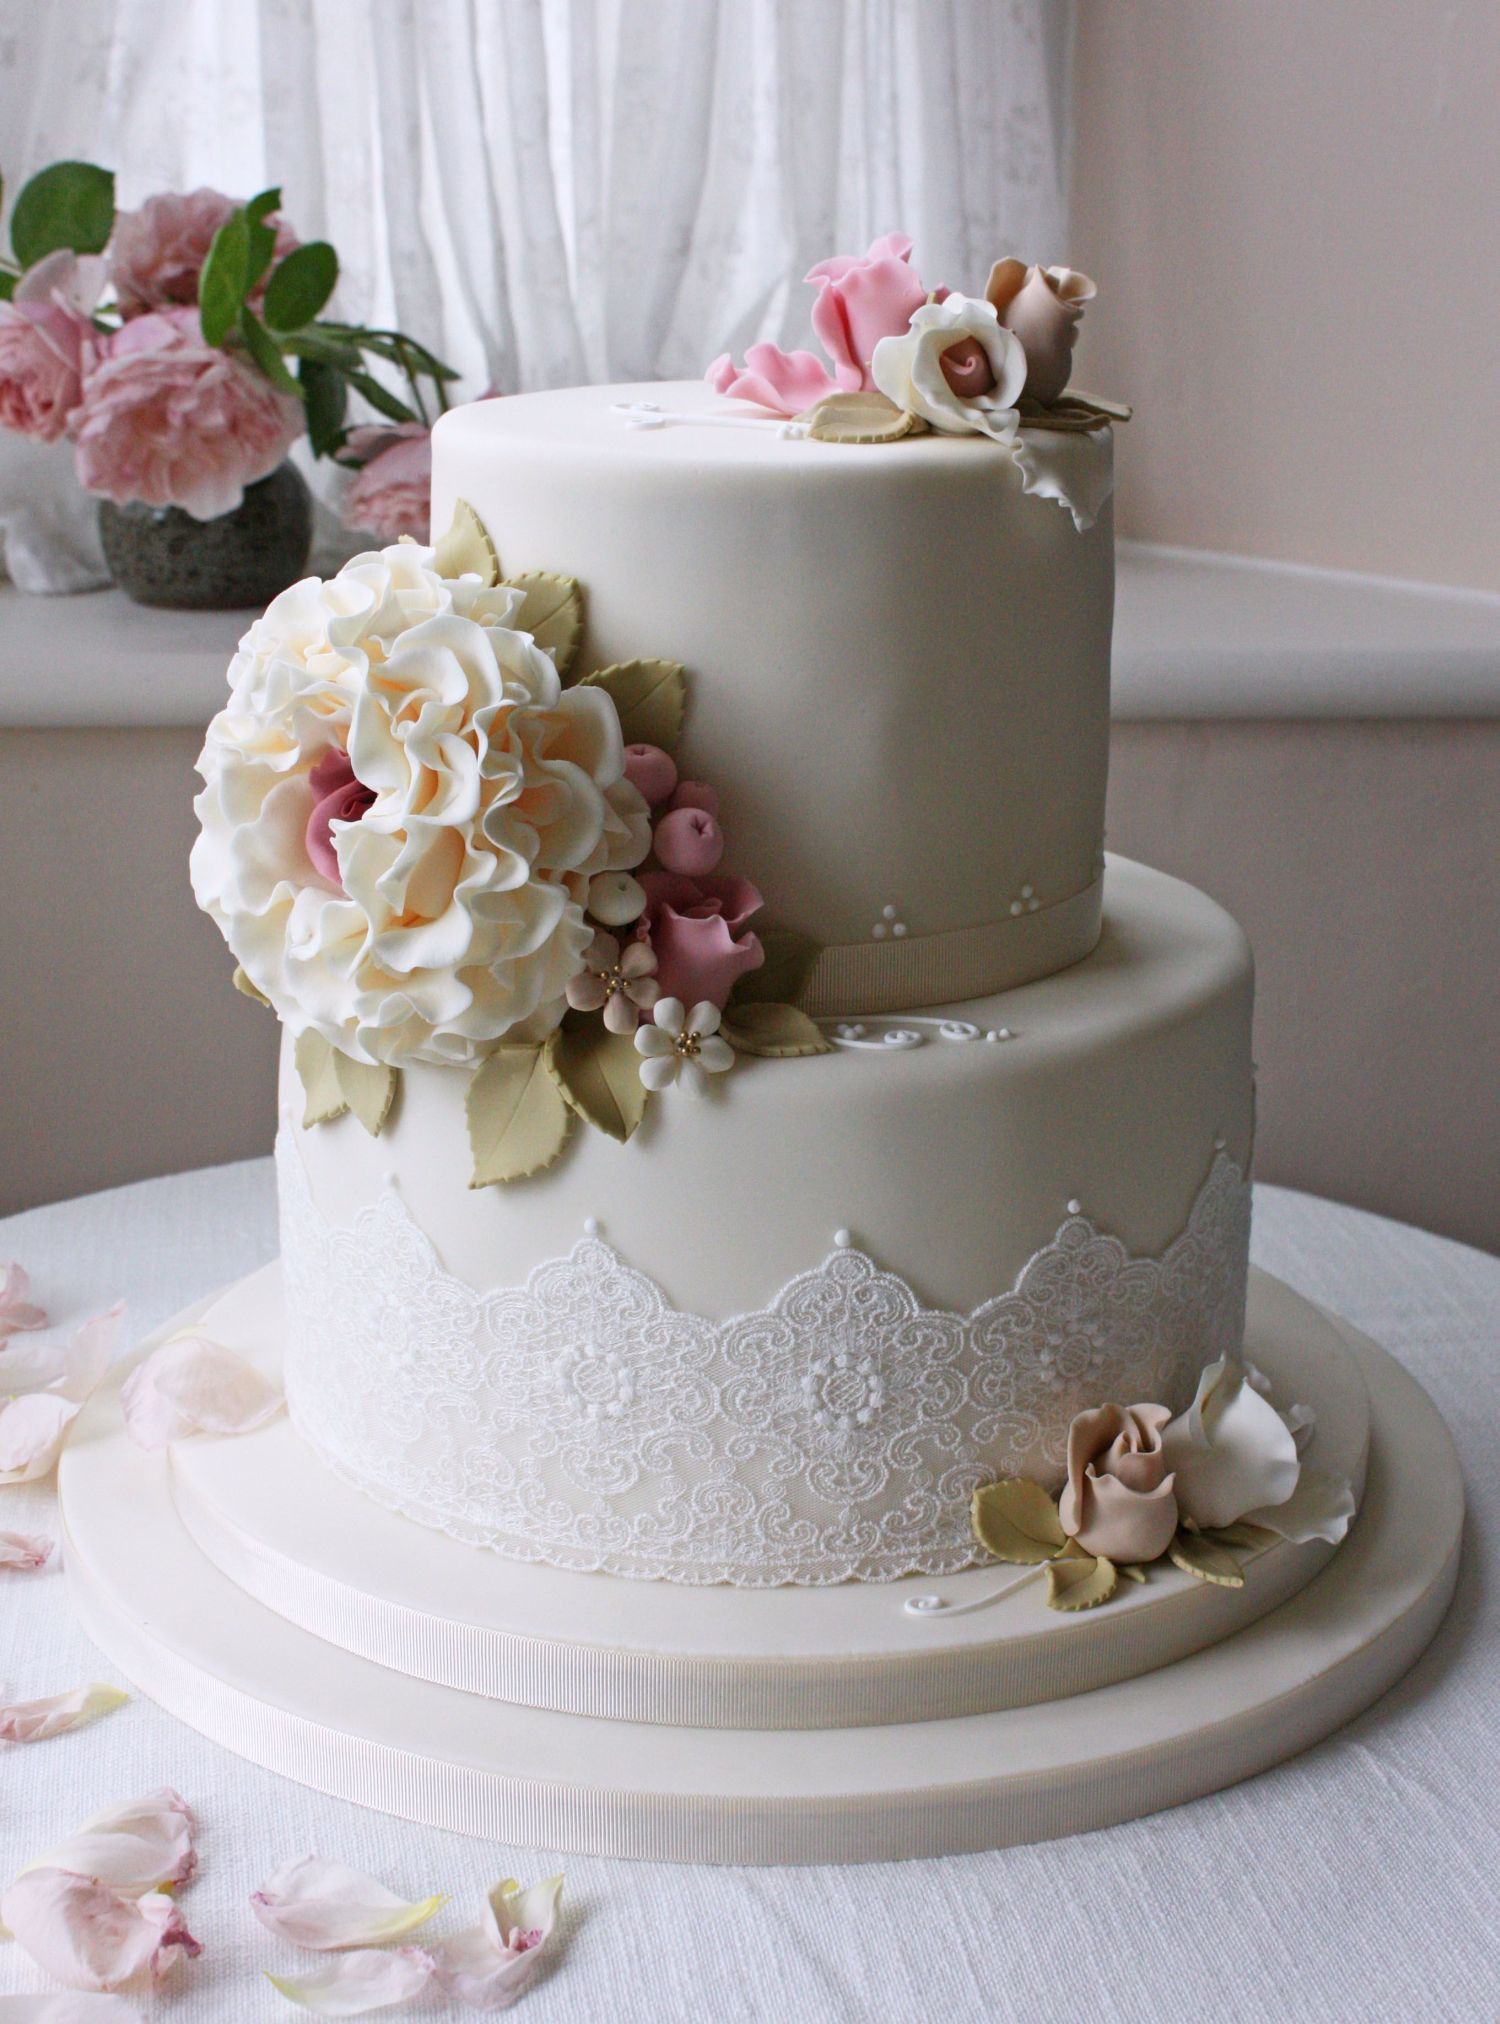 2 Tier Wedding Cakes Pictures
 Wedding Cake Ideas